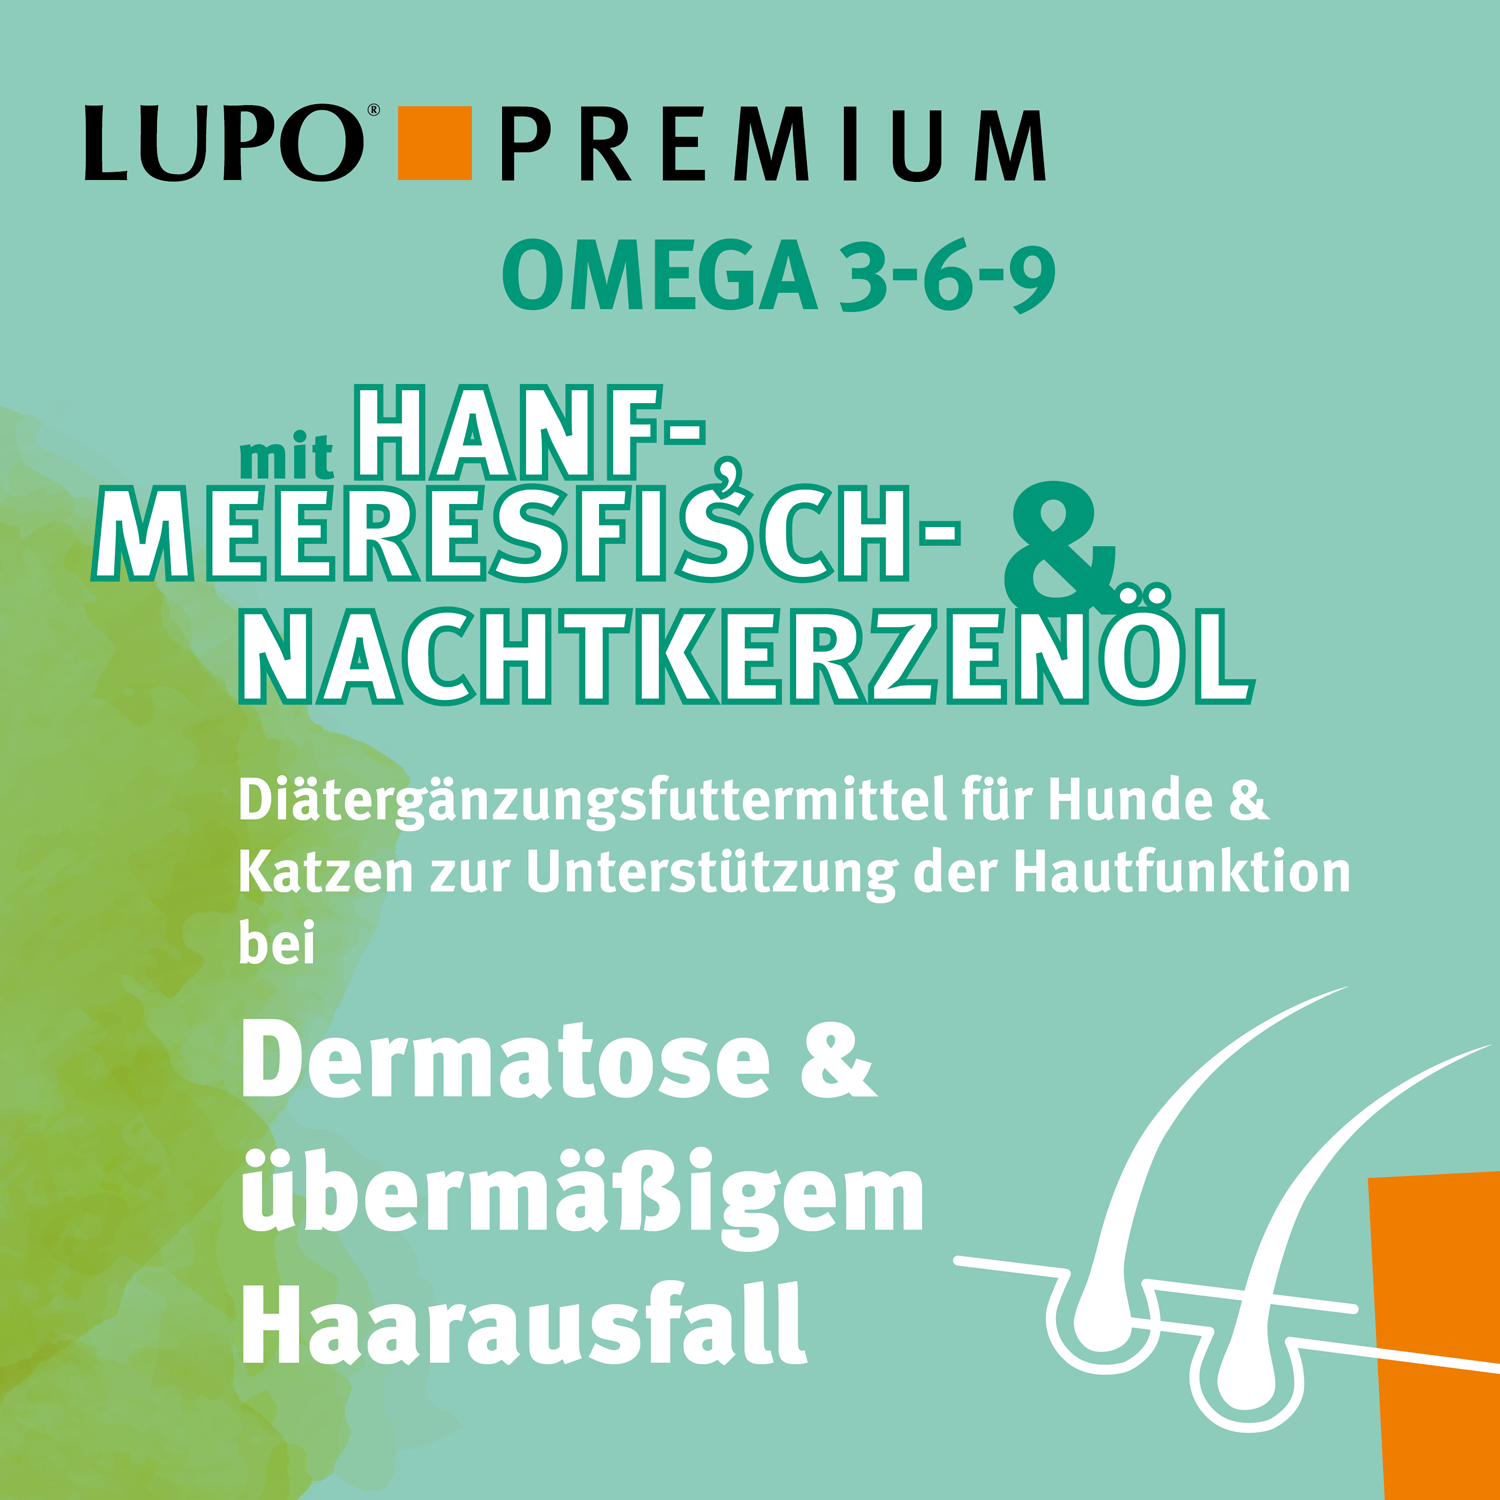 LUPO OMEGA 369 Premium 250 ml